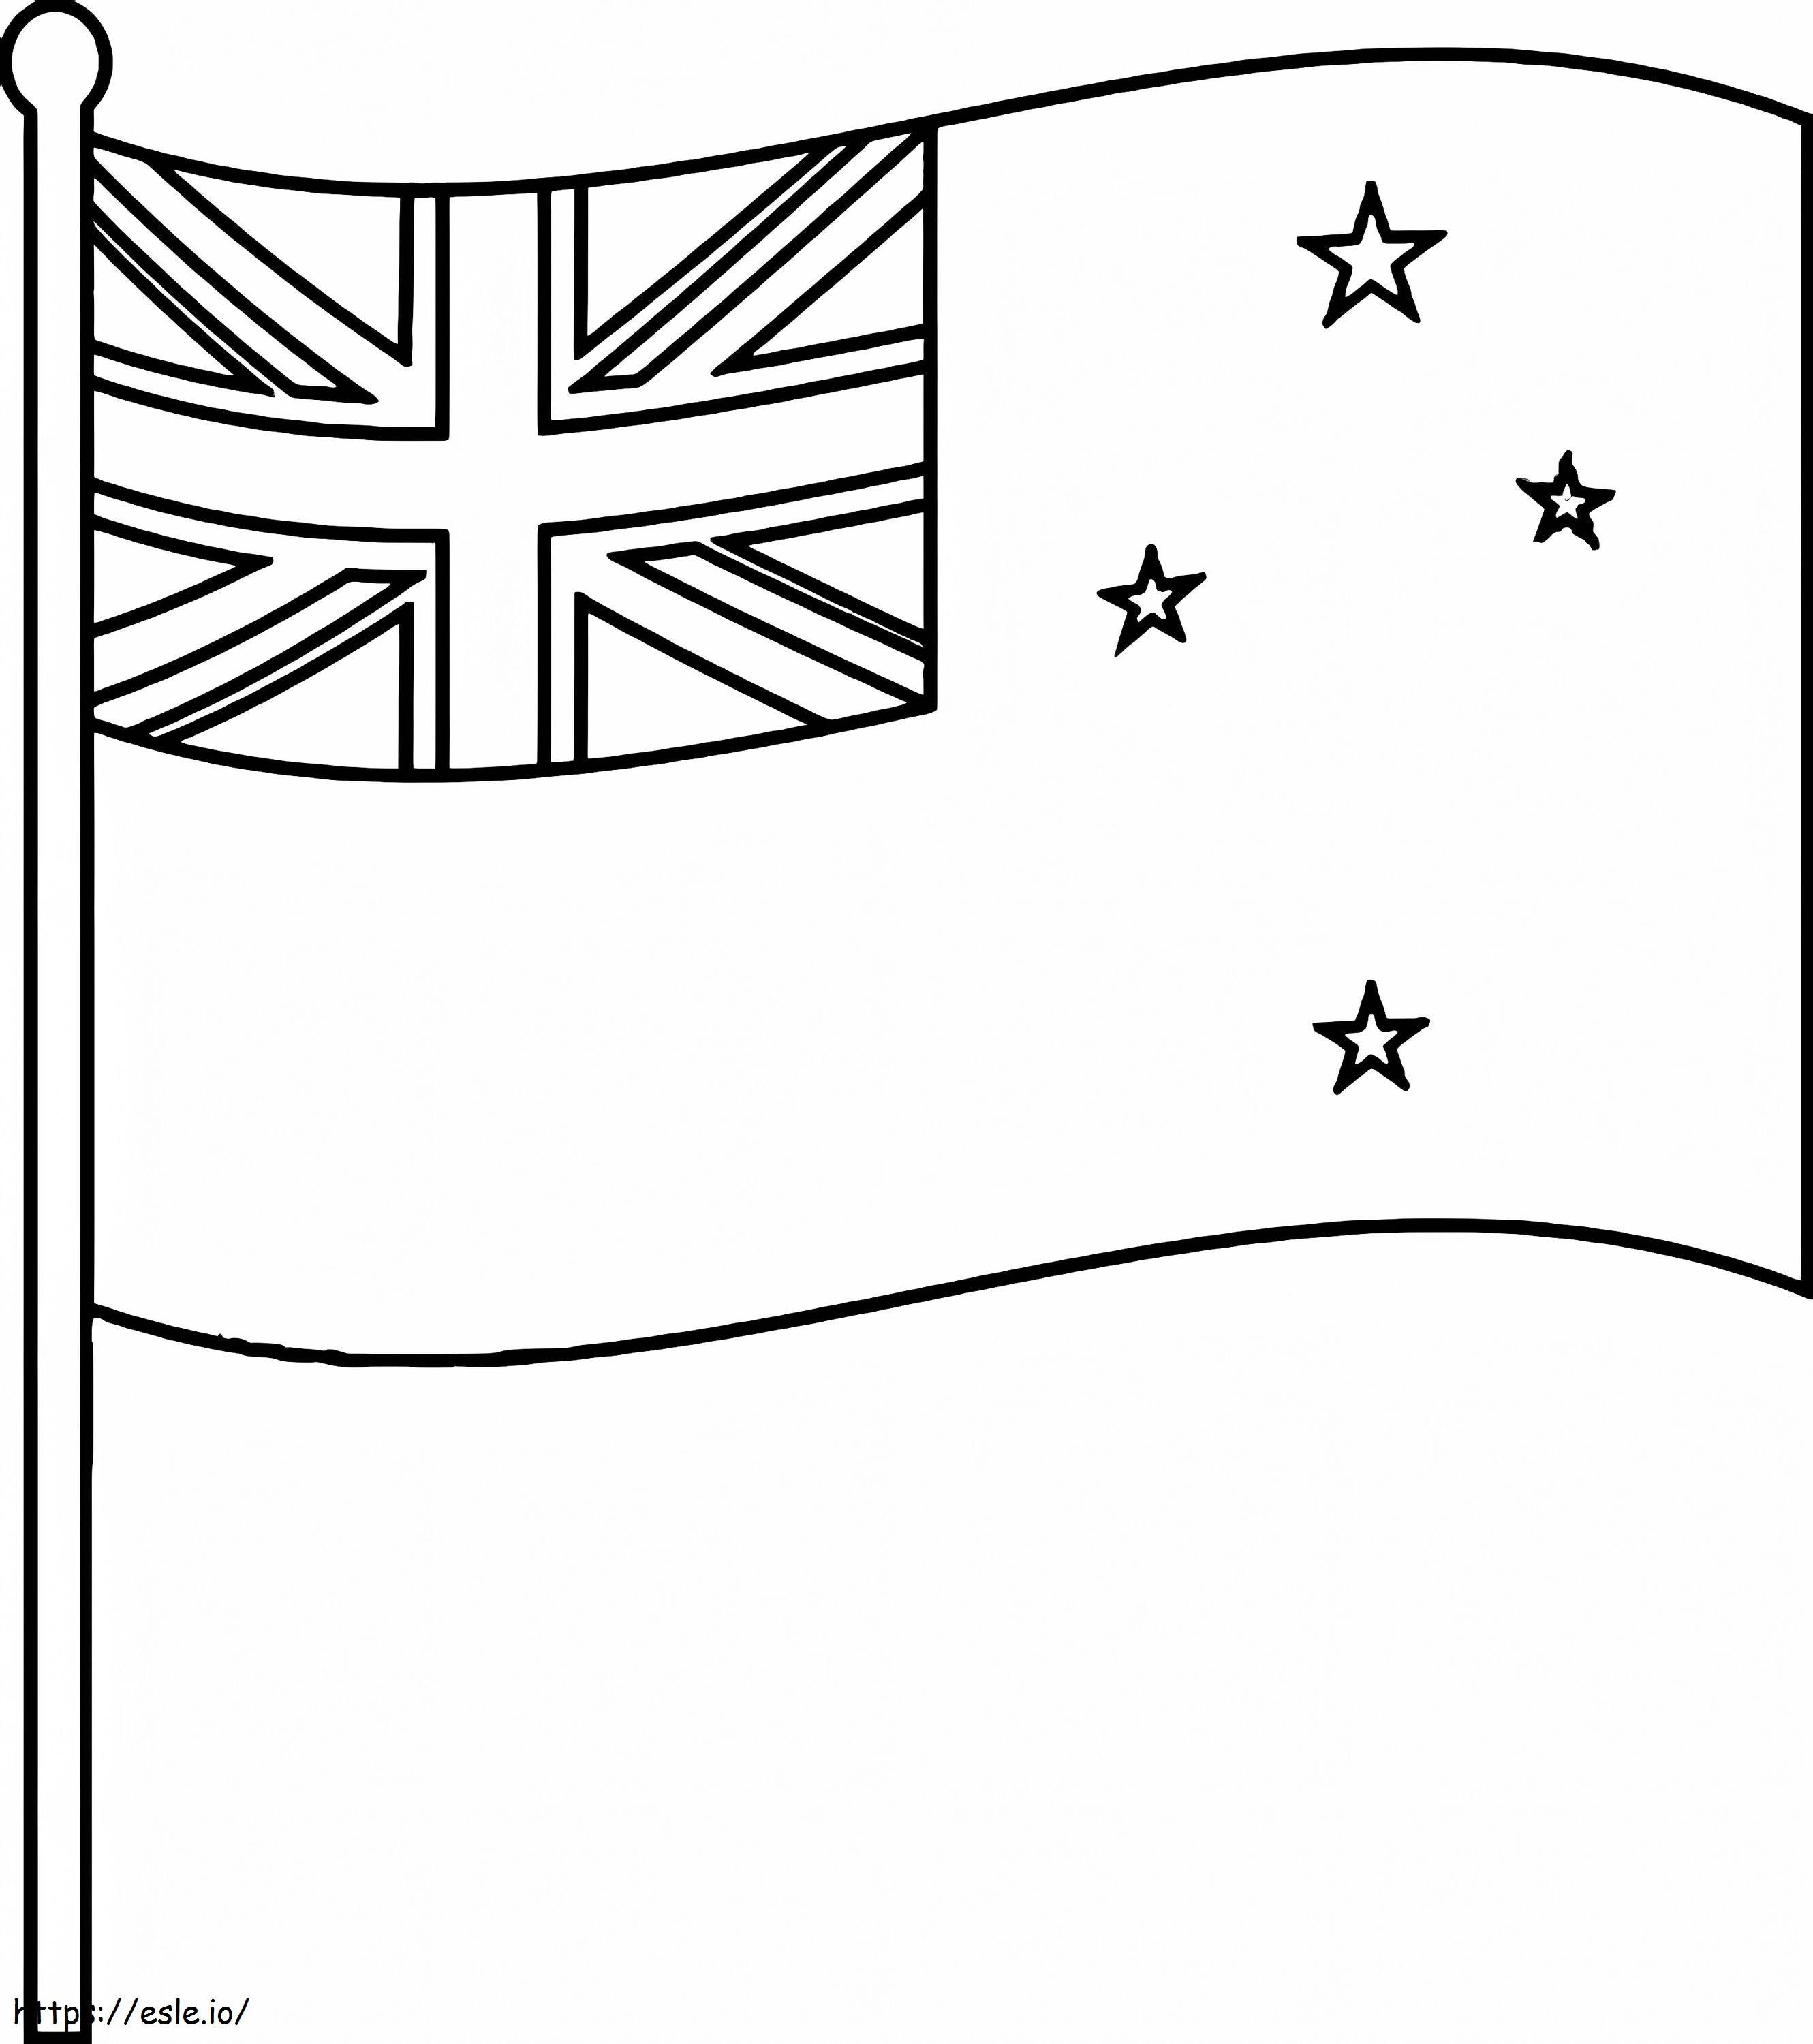 Neuseeland-Flagge 1 ausmalbilder